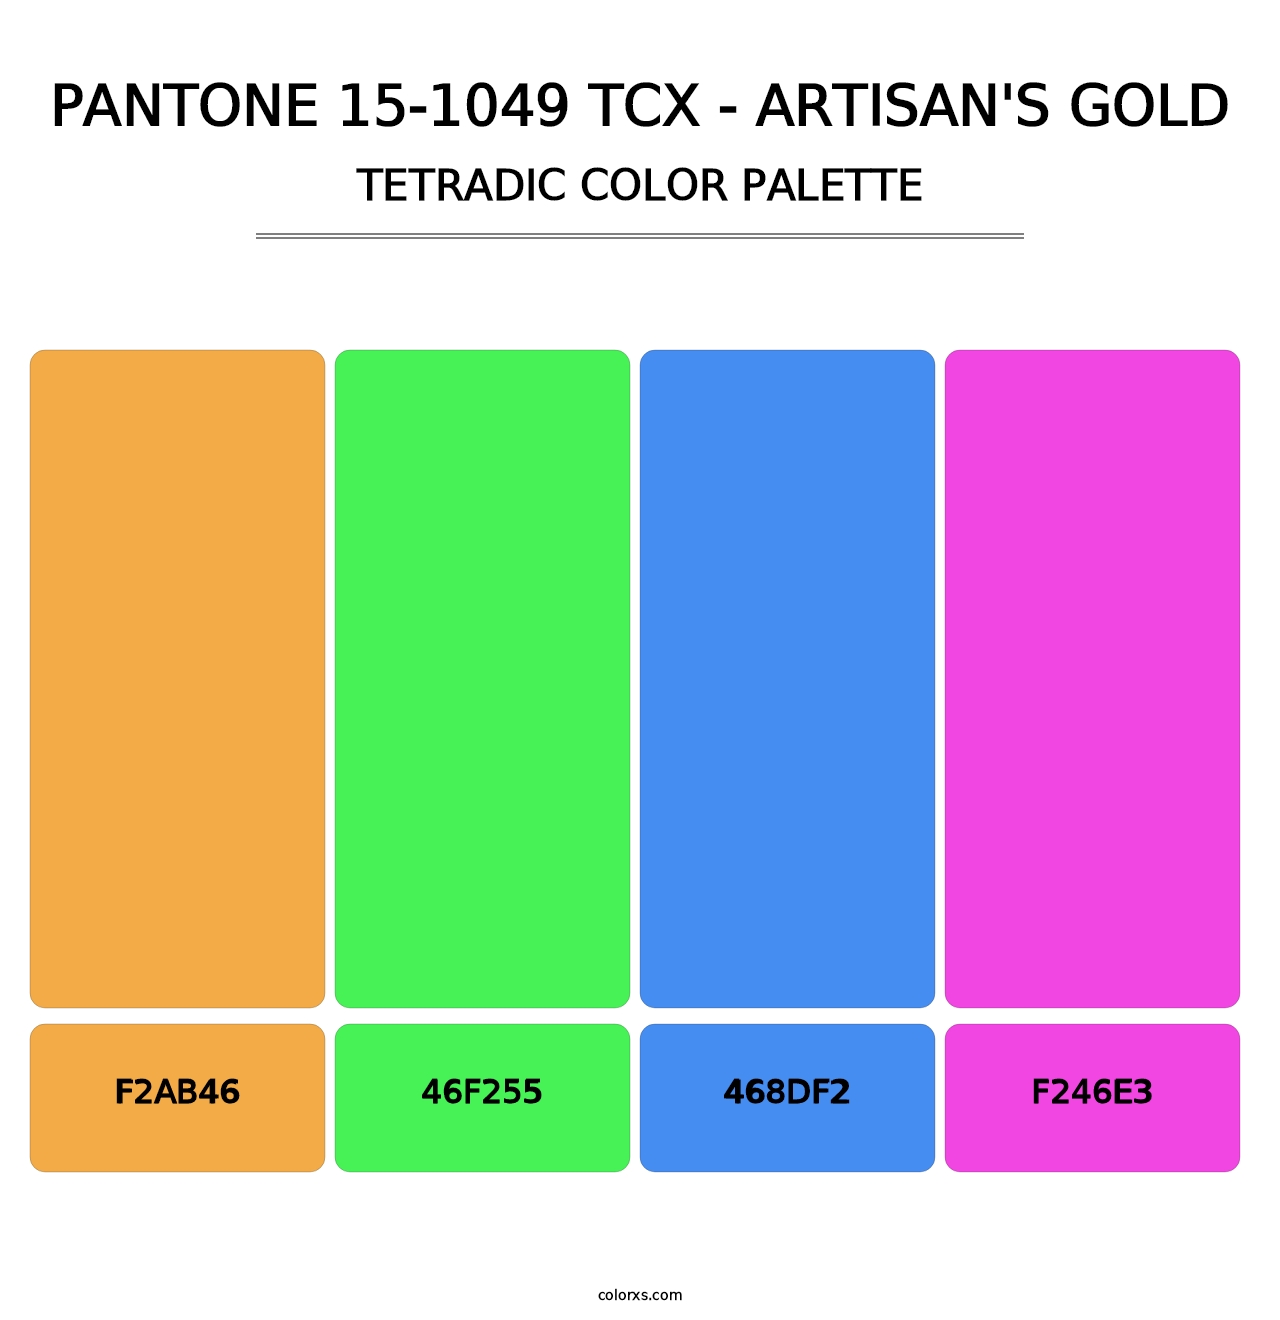 PANTONE 15-1049 TCX - Artisan's Gold - Tetradic Color Palette